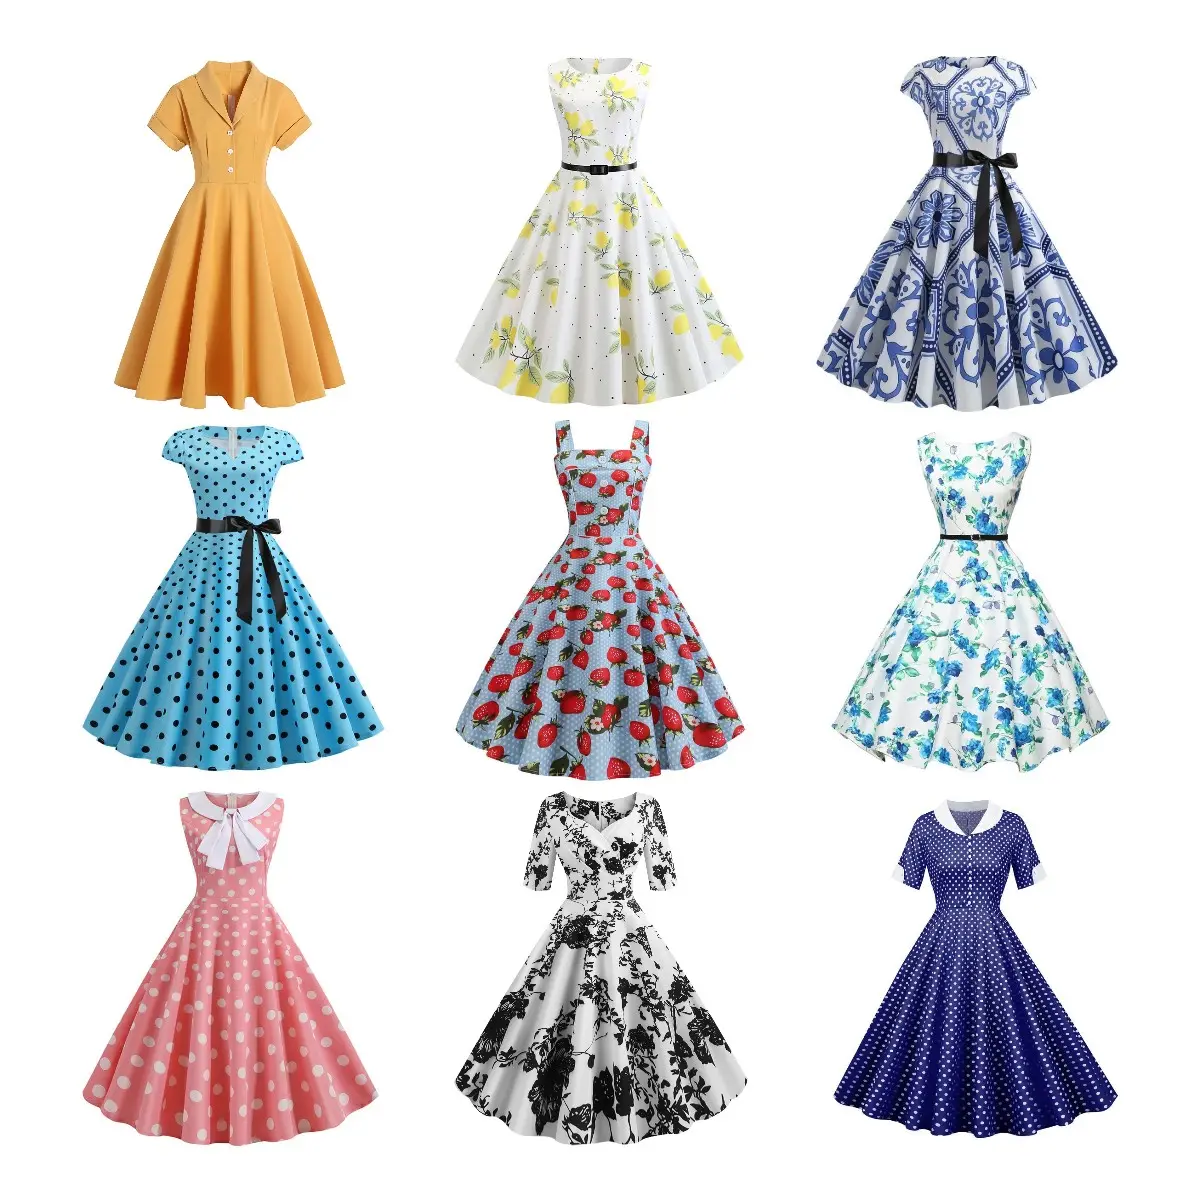 Wholesale Factory Price Fashion Women Summer Slim Chiffon Sleeveless Casual Dress